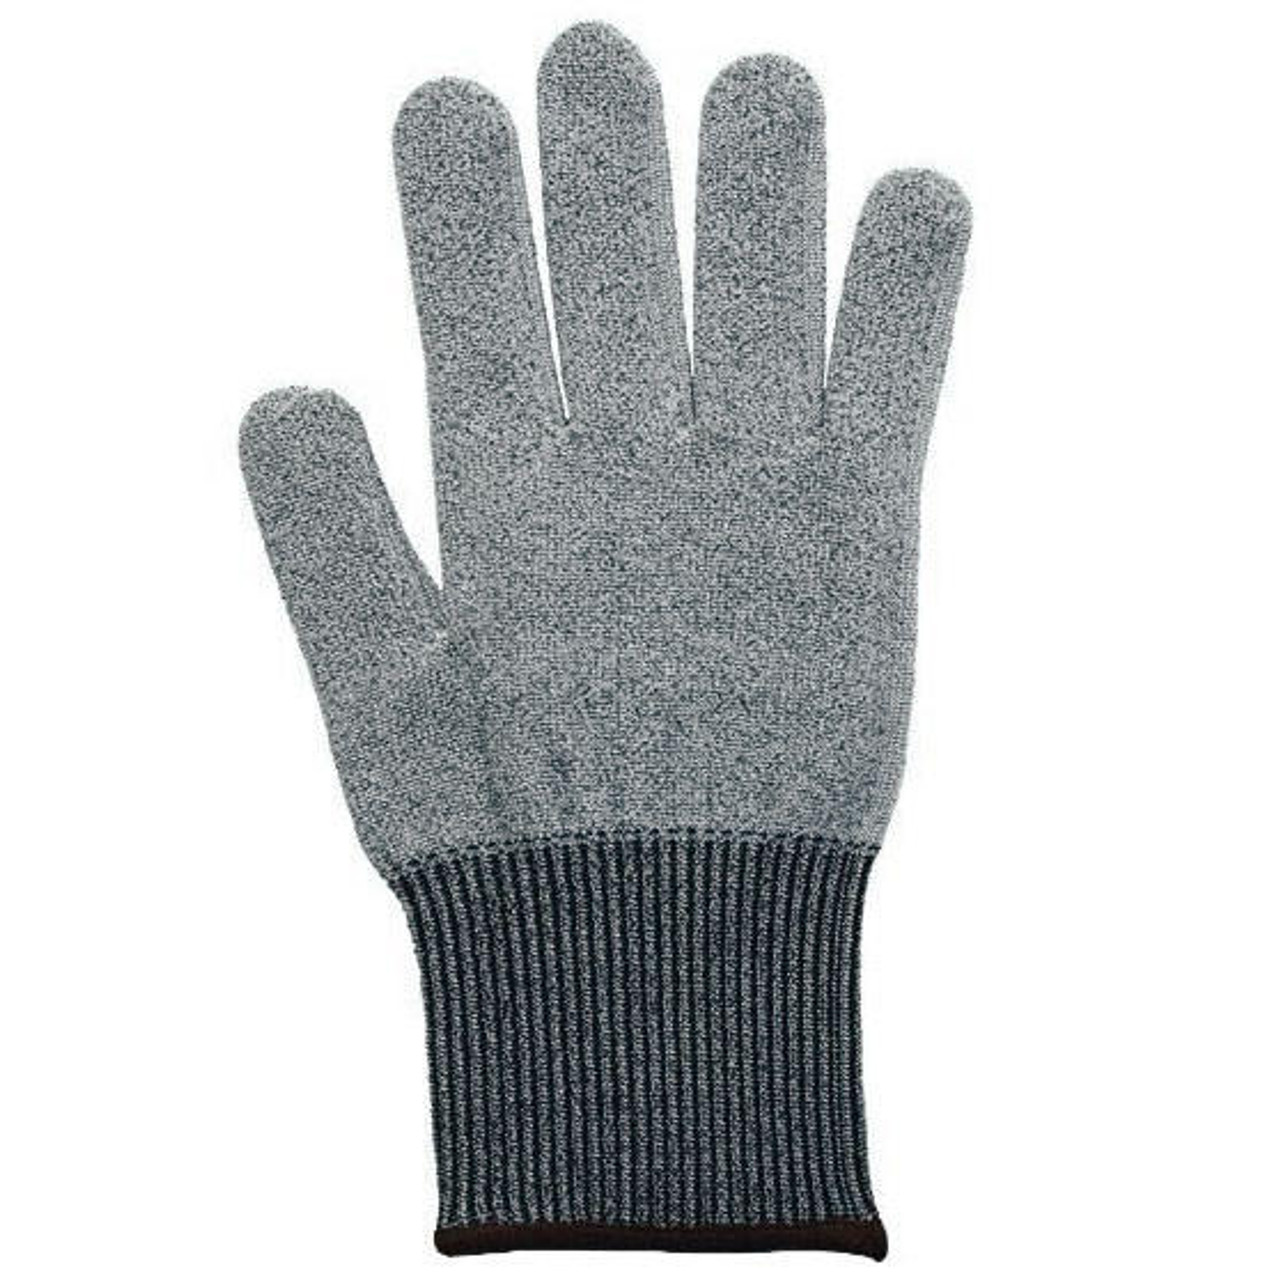 Cut Resistant Glove - Grey - The Gourmet Warehouse